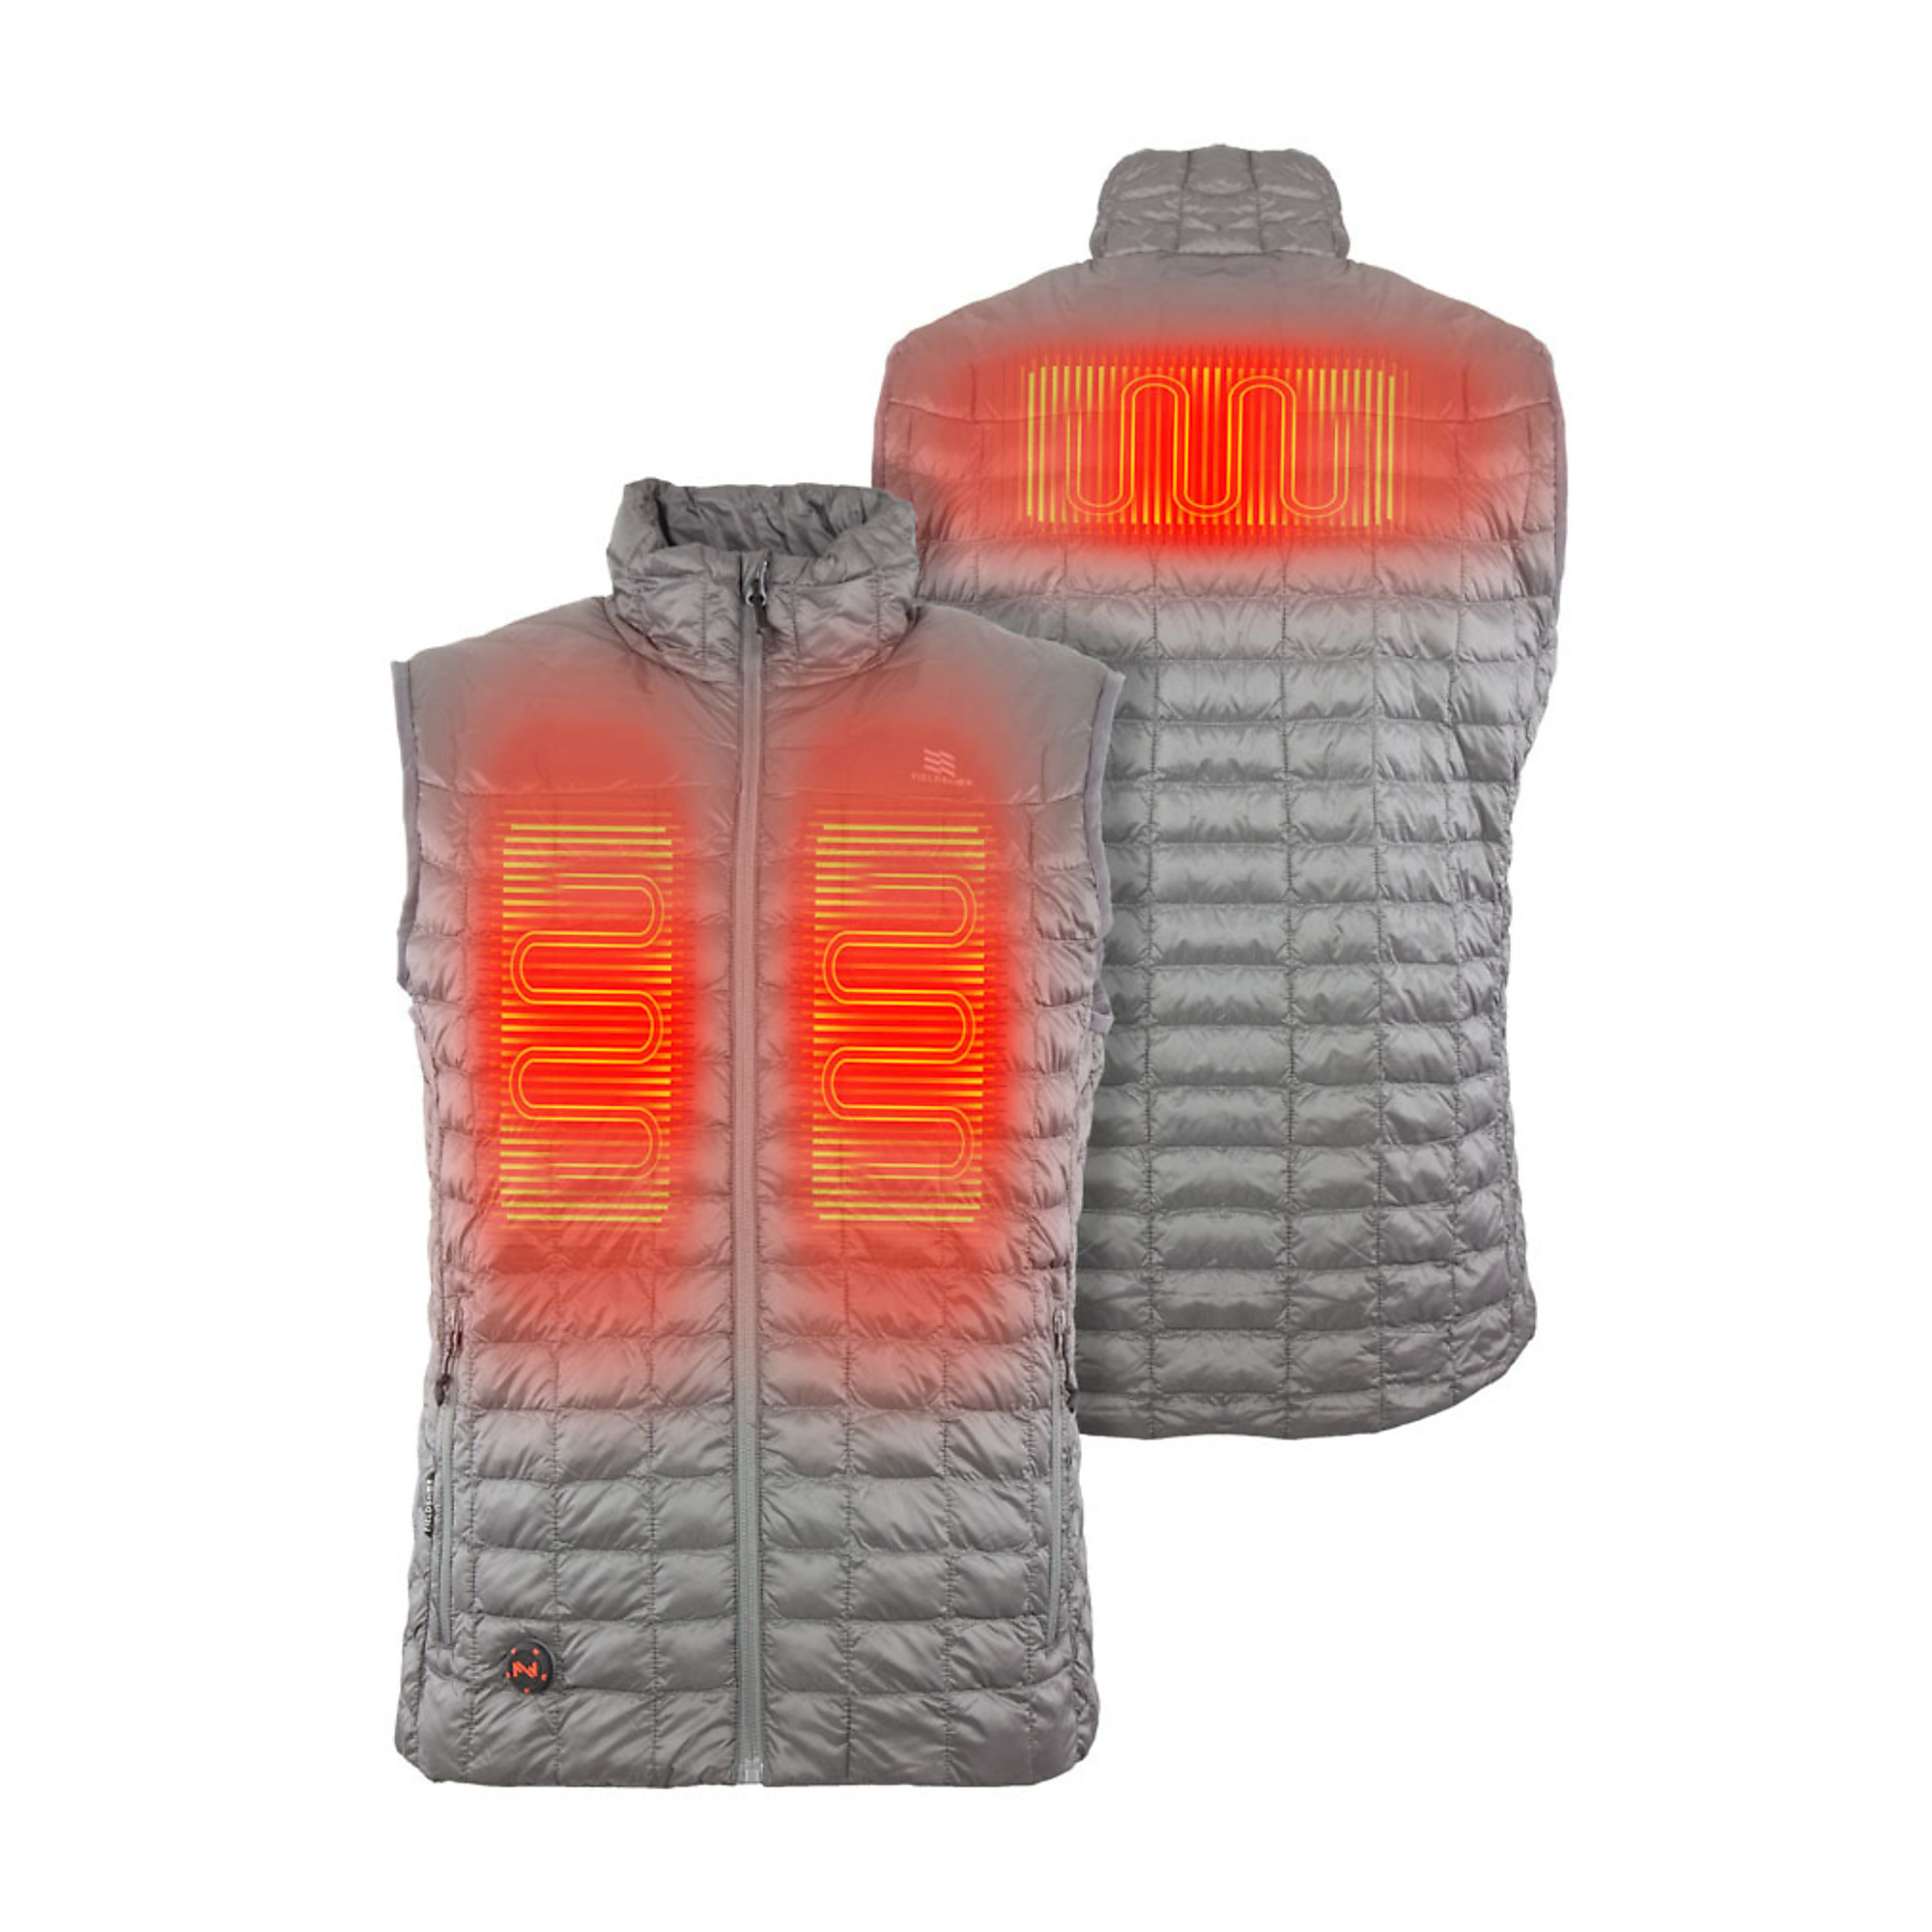 Fieldsheer, Men's Backcountry Heated Vest with 7.4v Battery, Size L, Color Grey, Model MWMV04320420